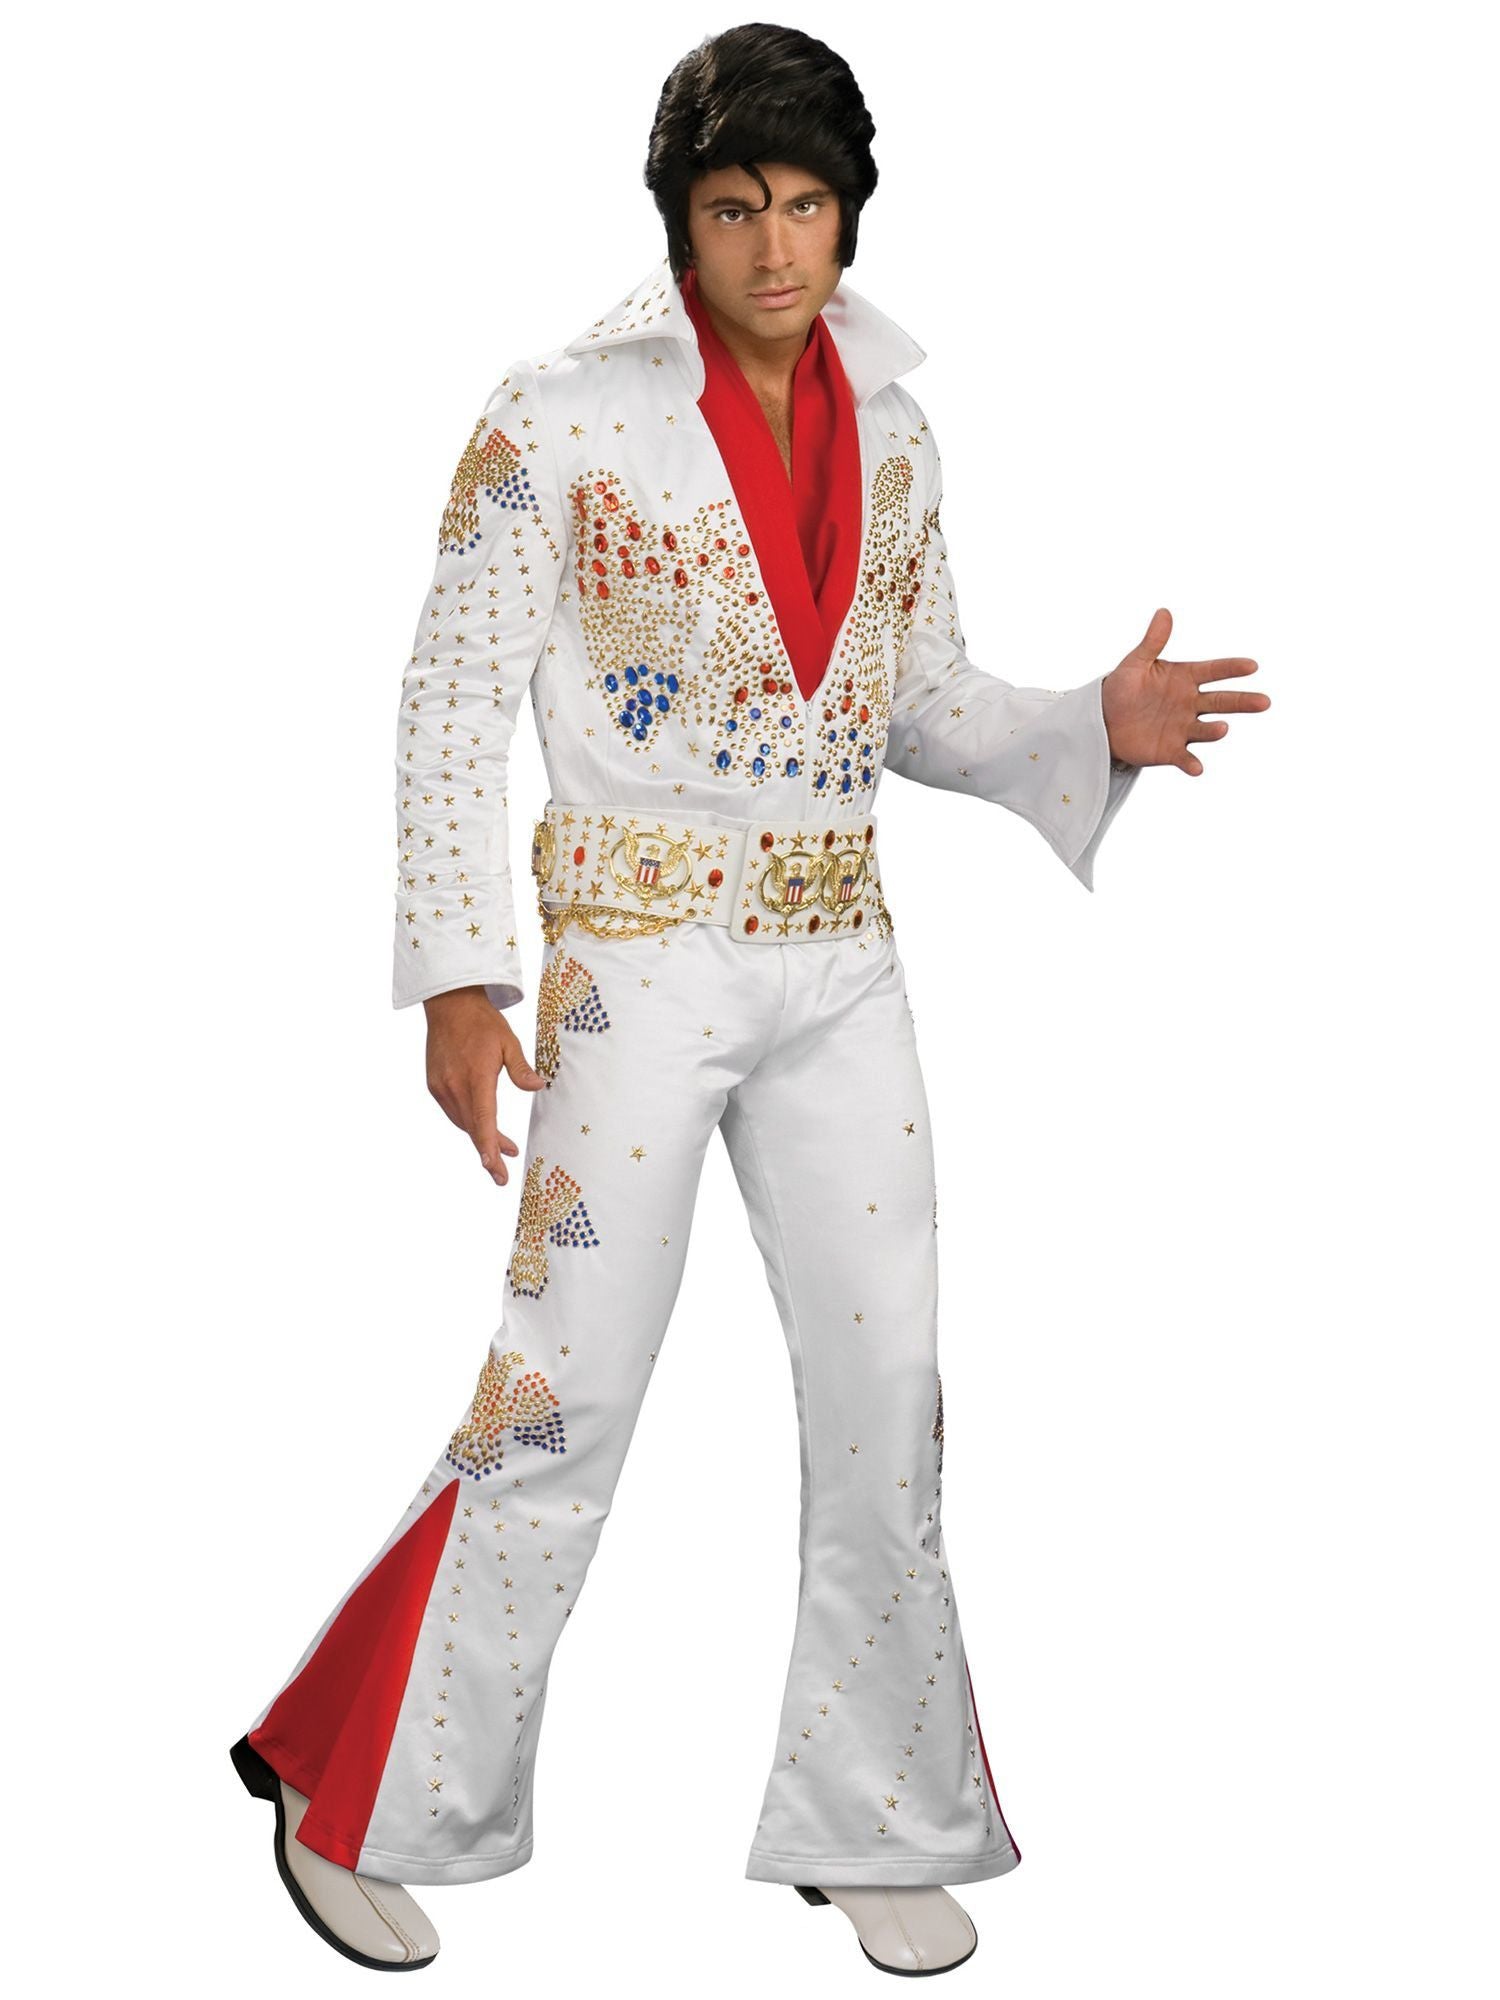 Men's Elvis Costume - Collector's Edition - costumes.com